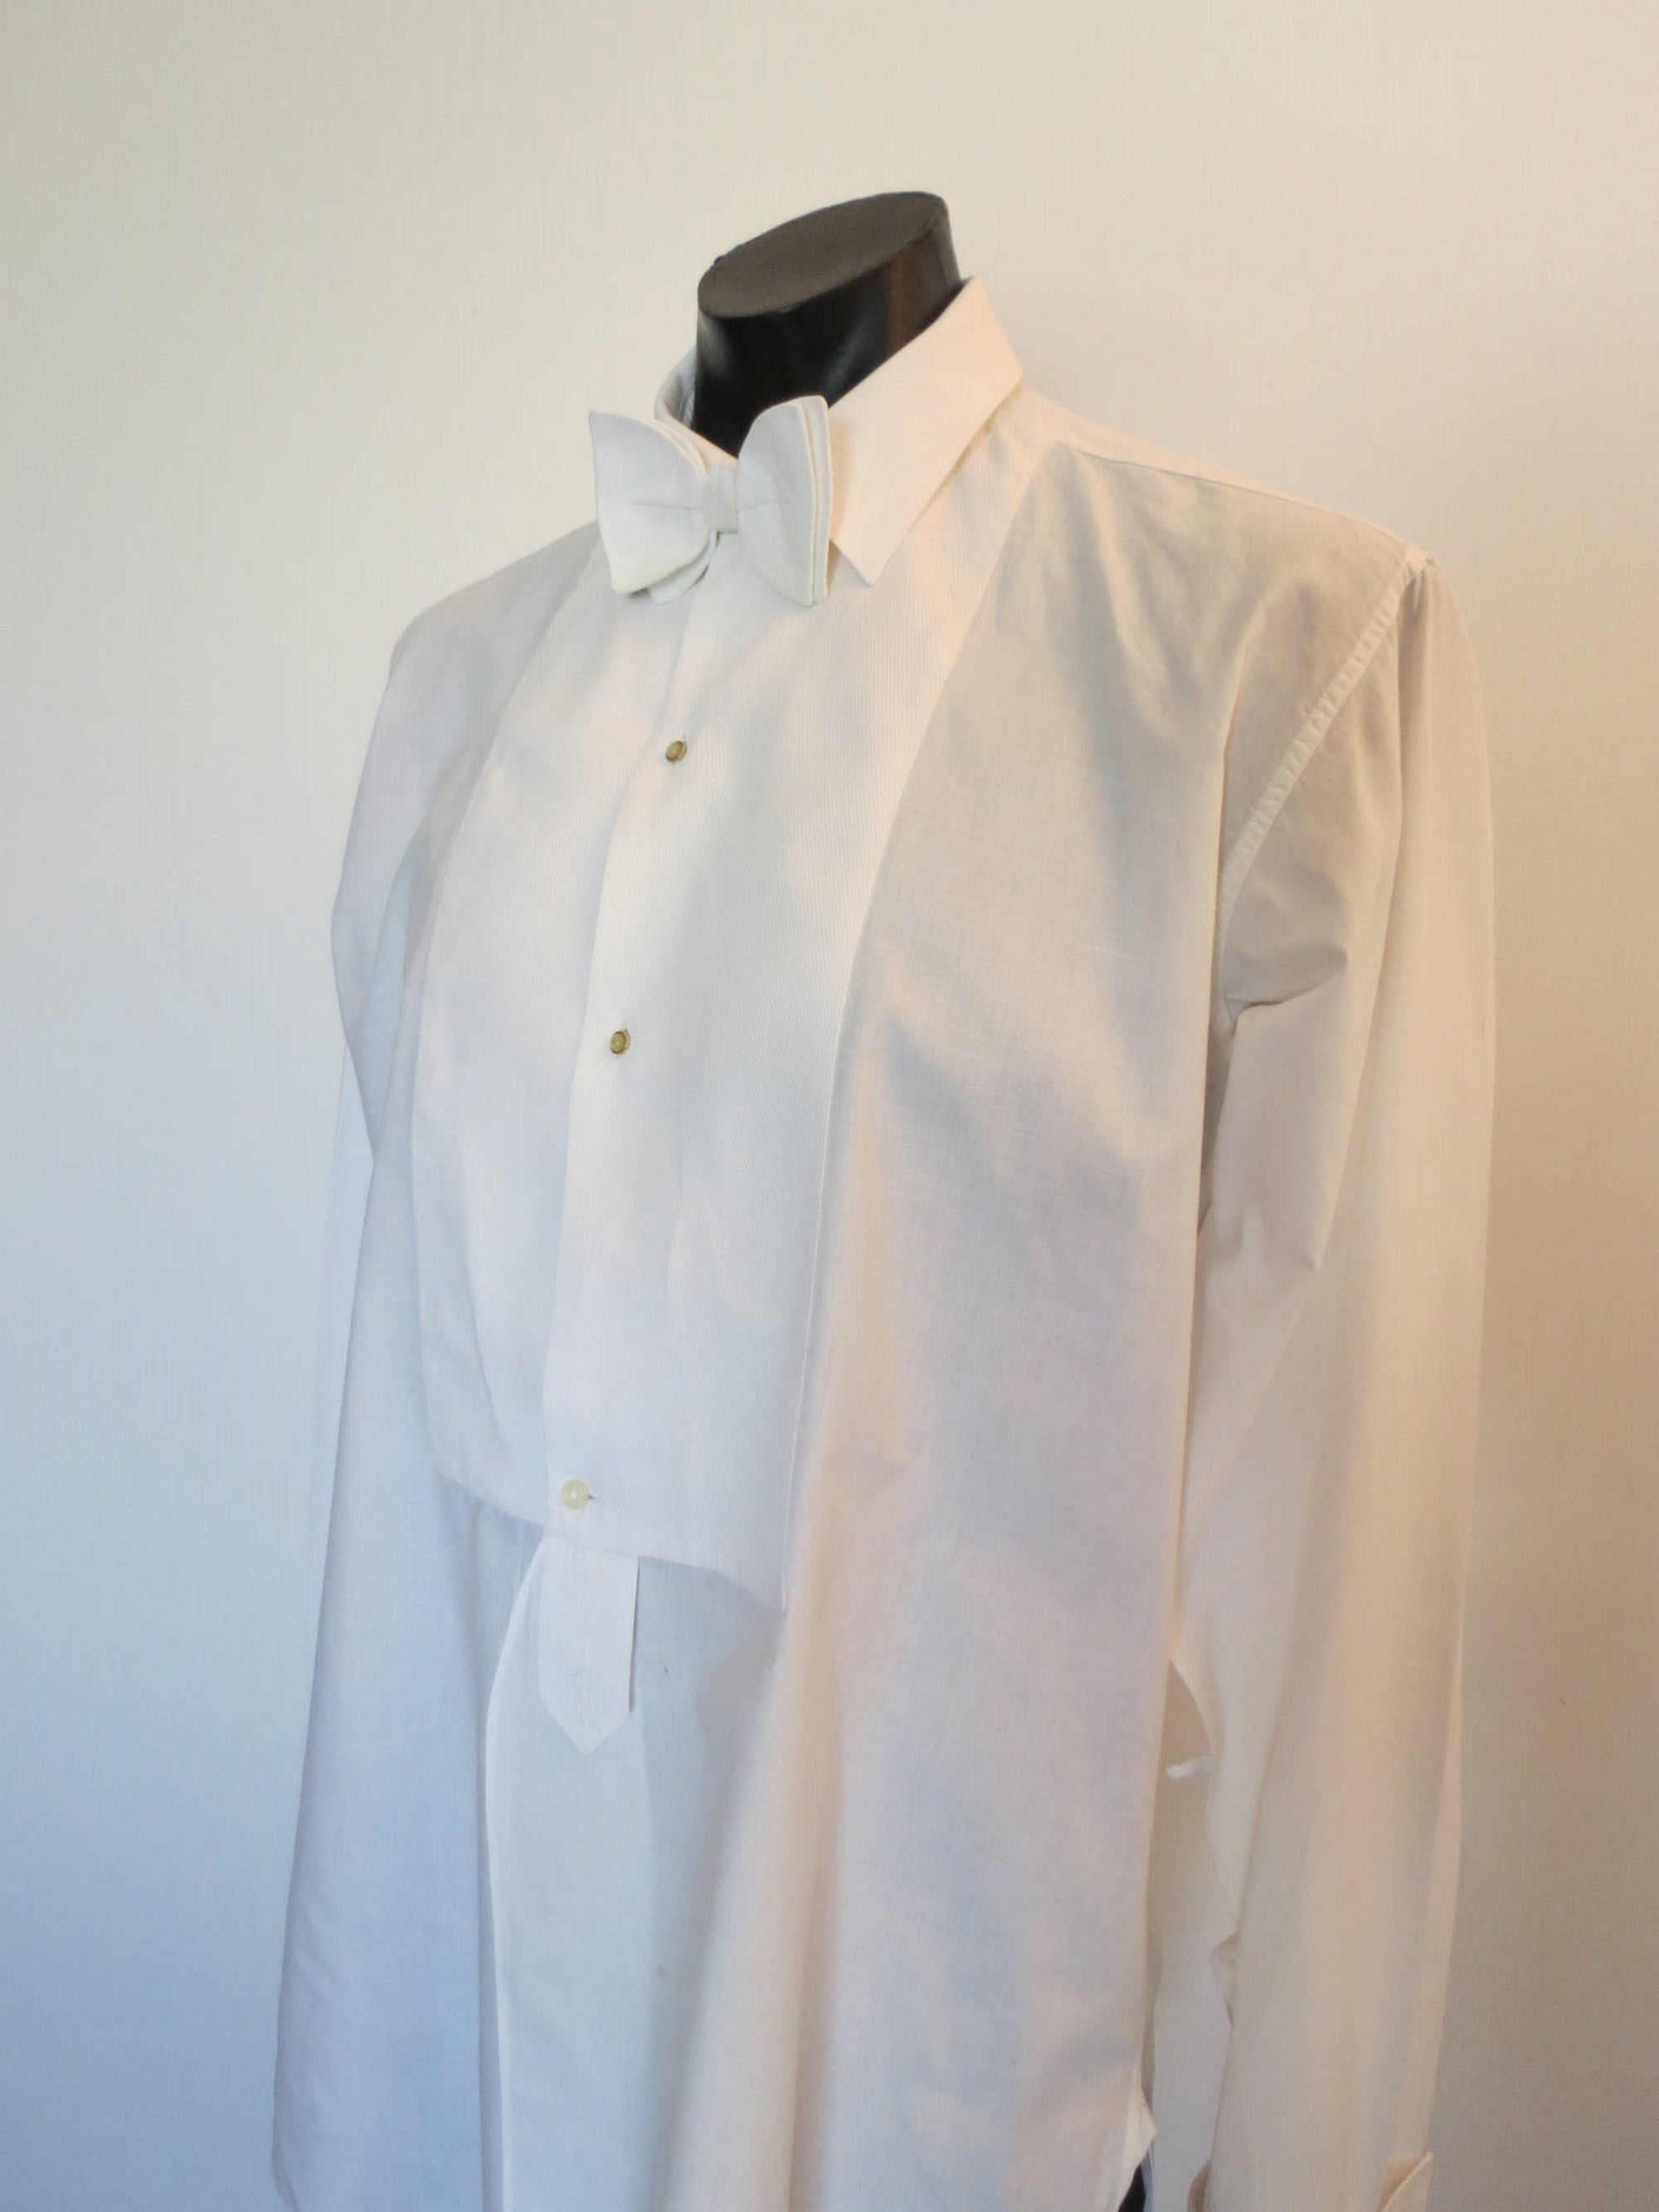 1950s vintage dress shirt formal by welmar